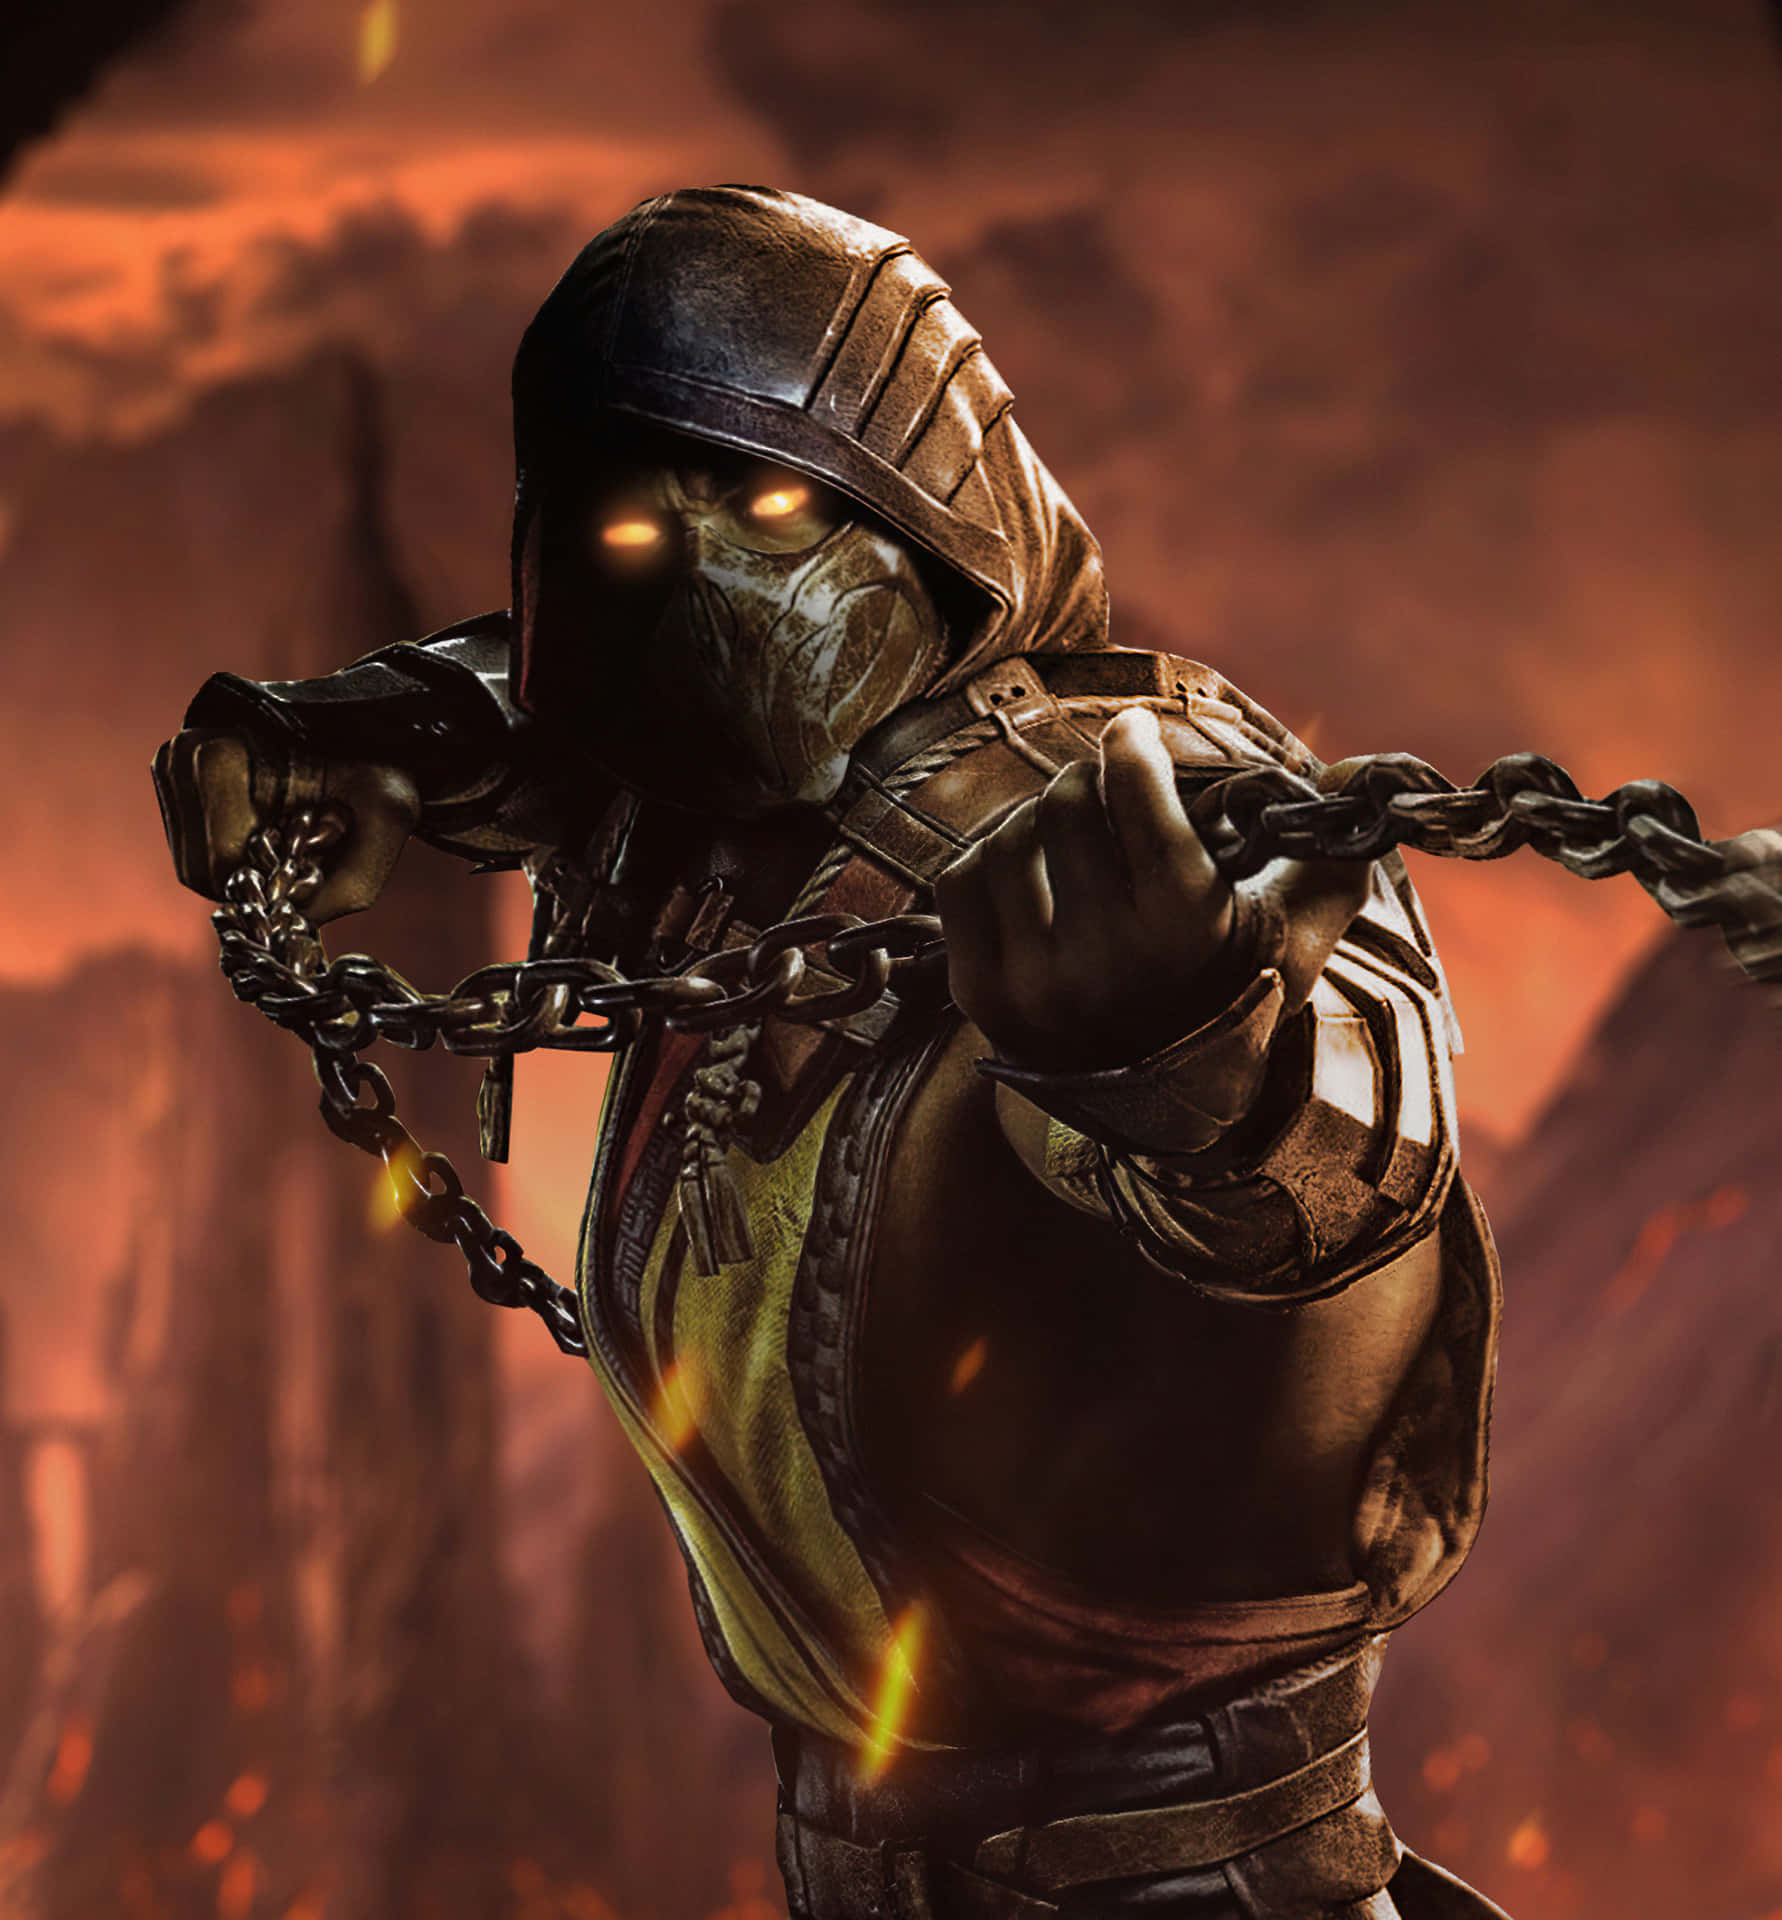 Scorpion Mortal Kombat Wallpaper,HD Games Wallpapers,4k Wallpapers